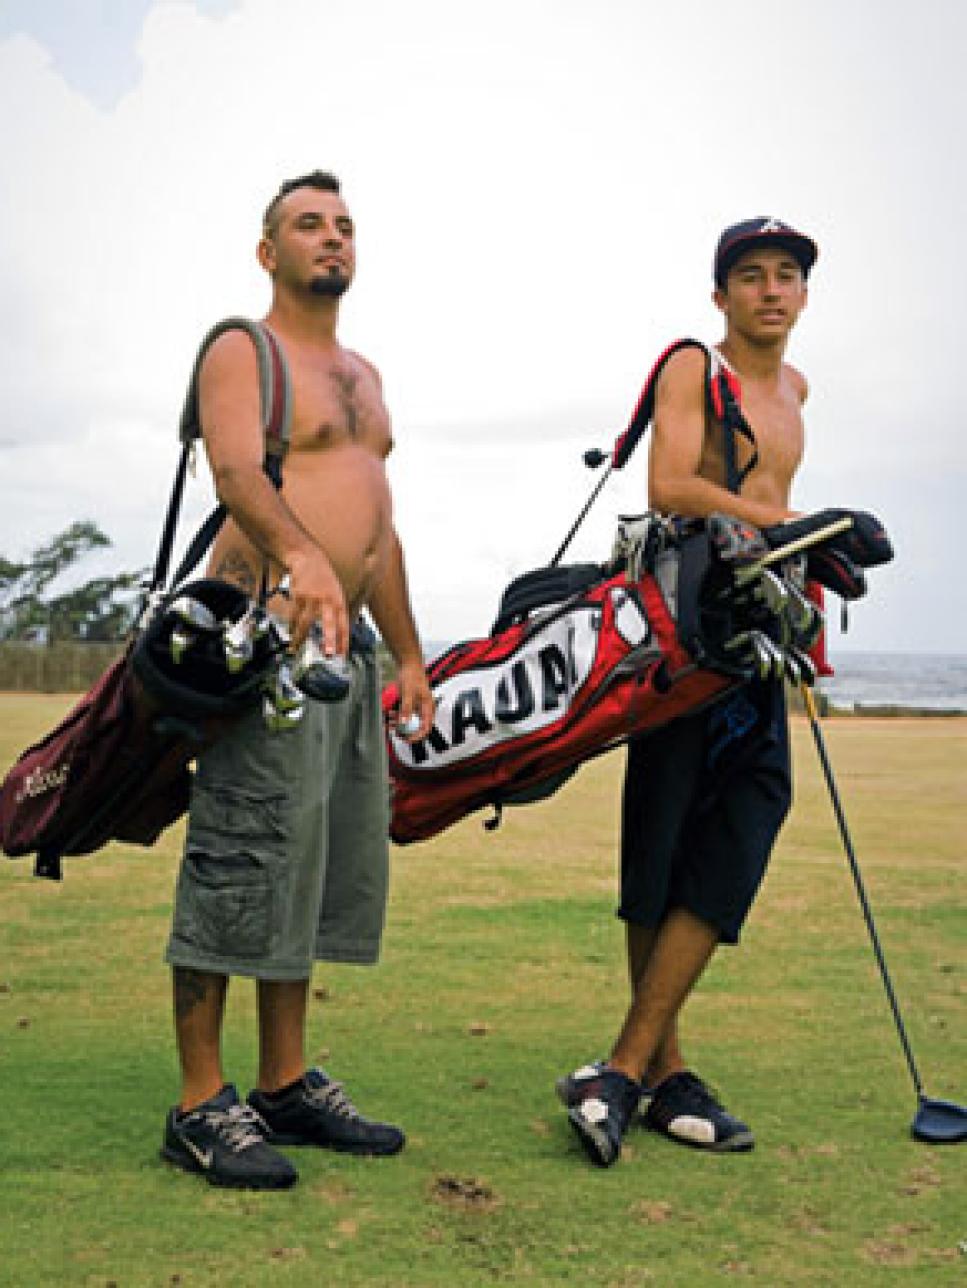 courses-2015-07-coar01-shirtless-golfers.jpg